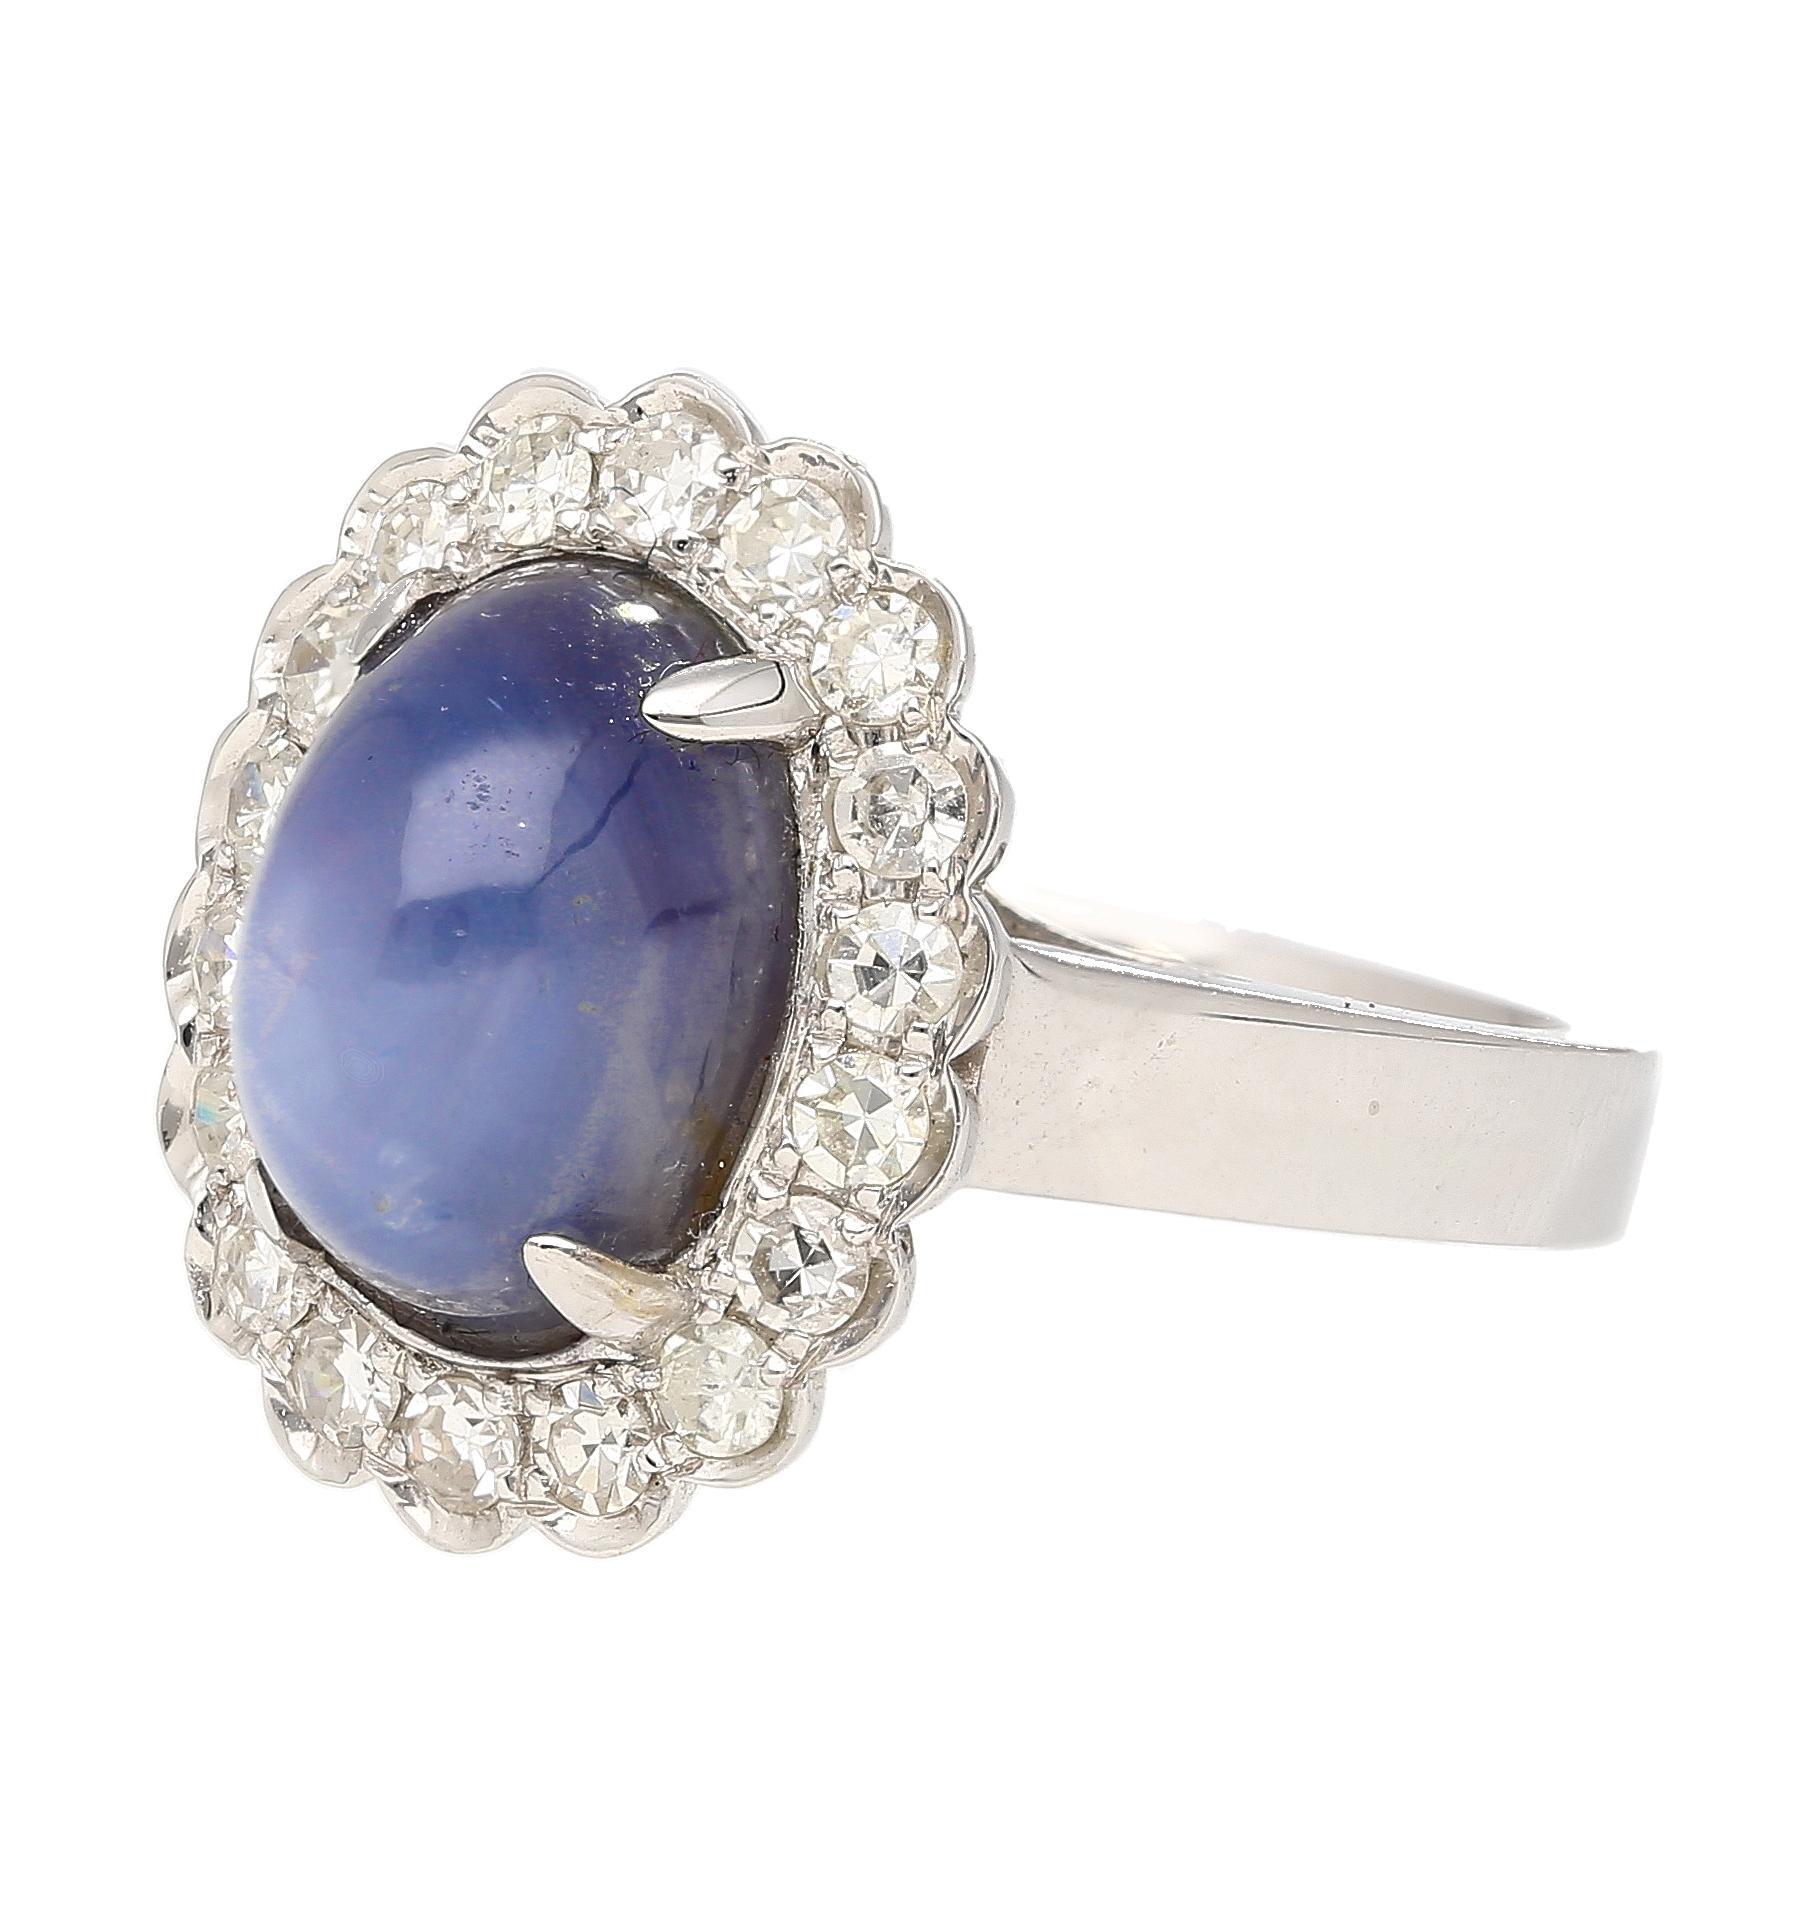 9.07 Carat Blue Star Sapphire & Diamond Halo Ring in 18K White Gold In New Condition For Sale In Miami, FL